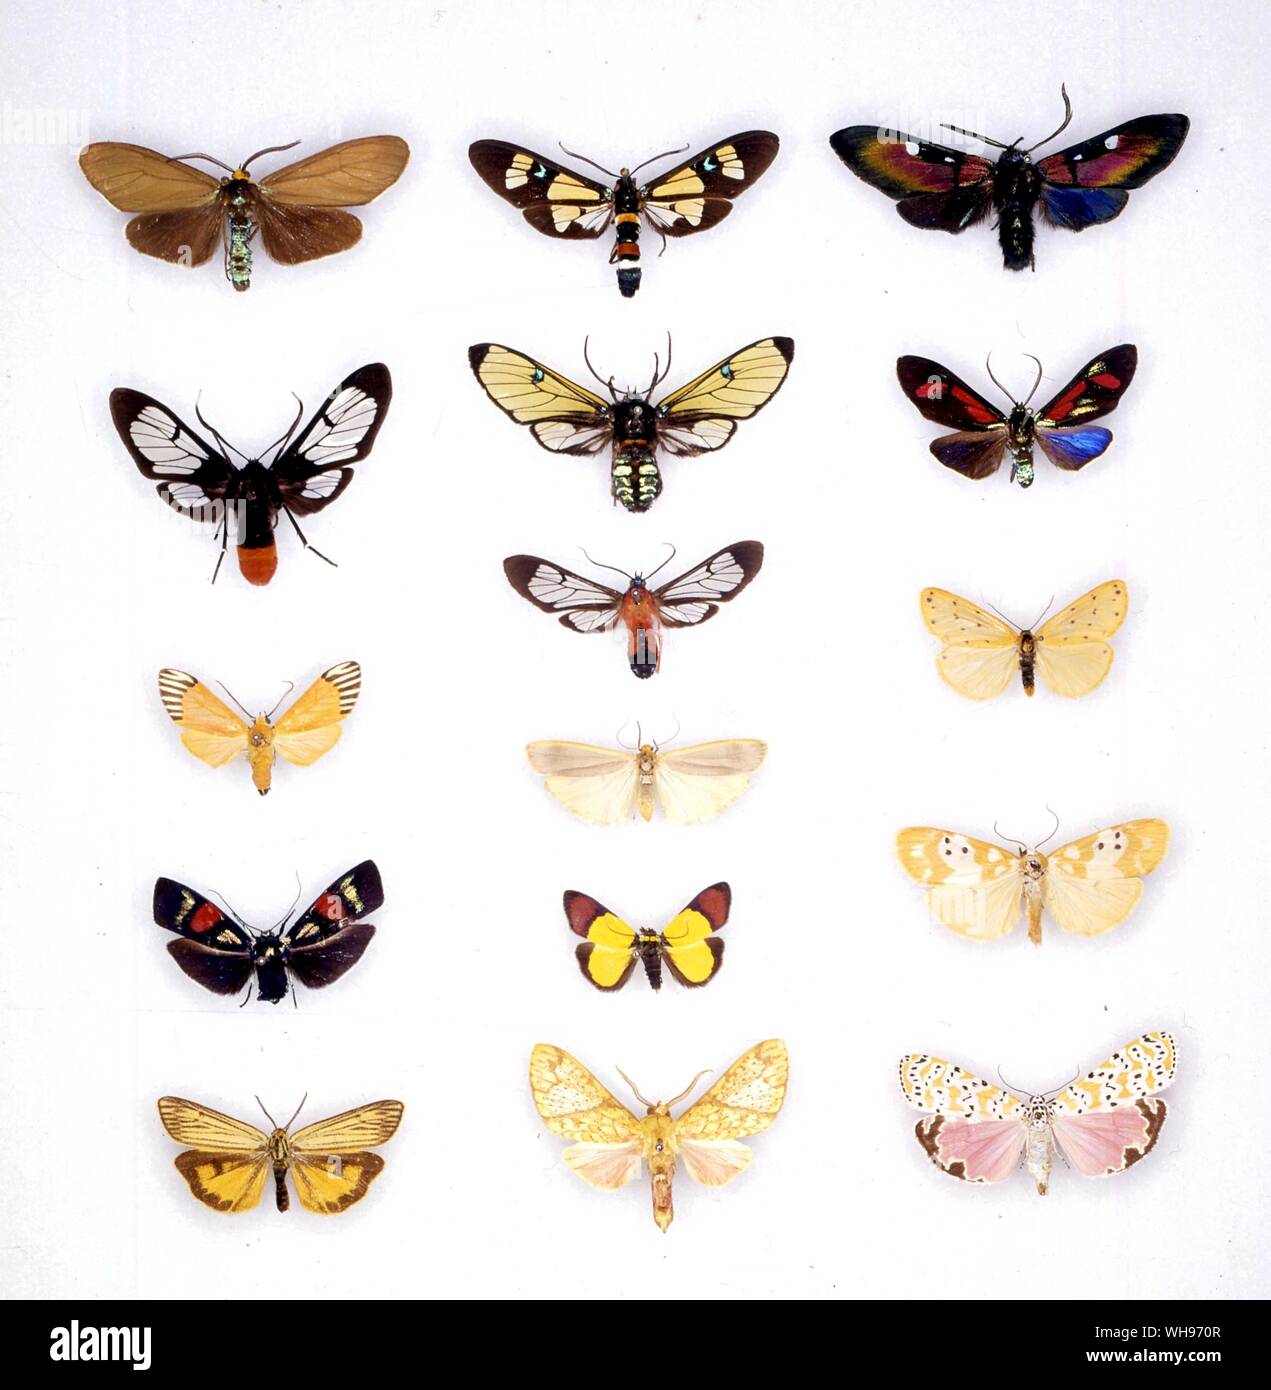 Butterflies/moths - (top left to bottom) Ctenucha virginica, Dasysphinx torquata, Napata walkeri, Chionaema scintillans, Spiris striata - (middle top to bottom) Euchromia lethe, Gymnelia gemmifera, Cosmosoma auge, Eilema complana, Damias esthla, Premolis semirufa - (top right to bottom) Chrysocale ignita, Cyanopepla pretiosa, Setina irrorella, Chionaema moupinensis, Utetheisa ornatrix bella Stock Photo